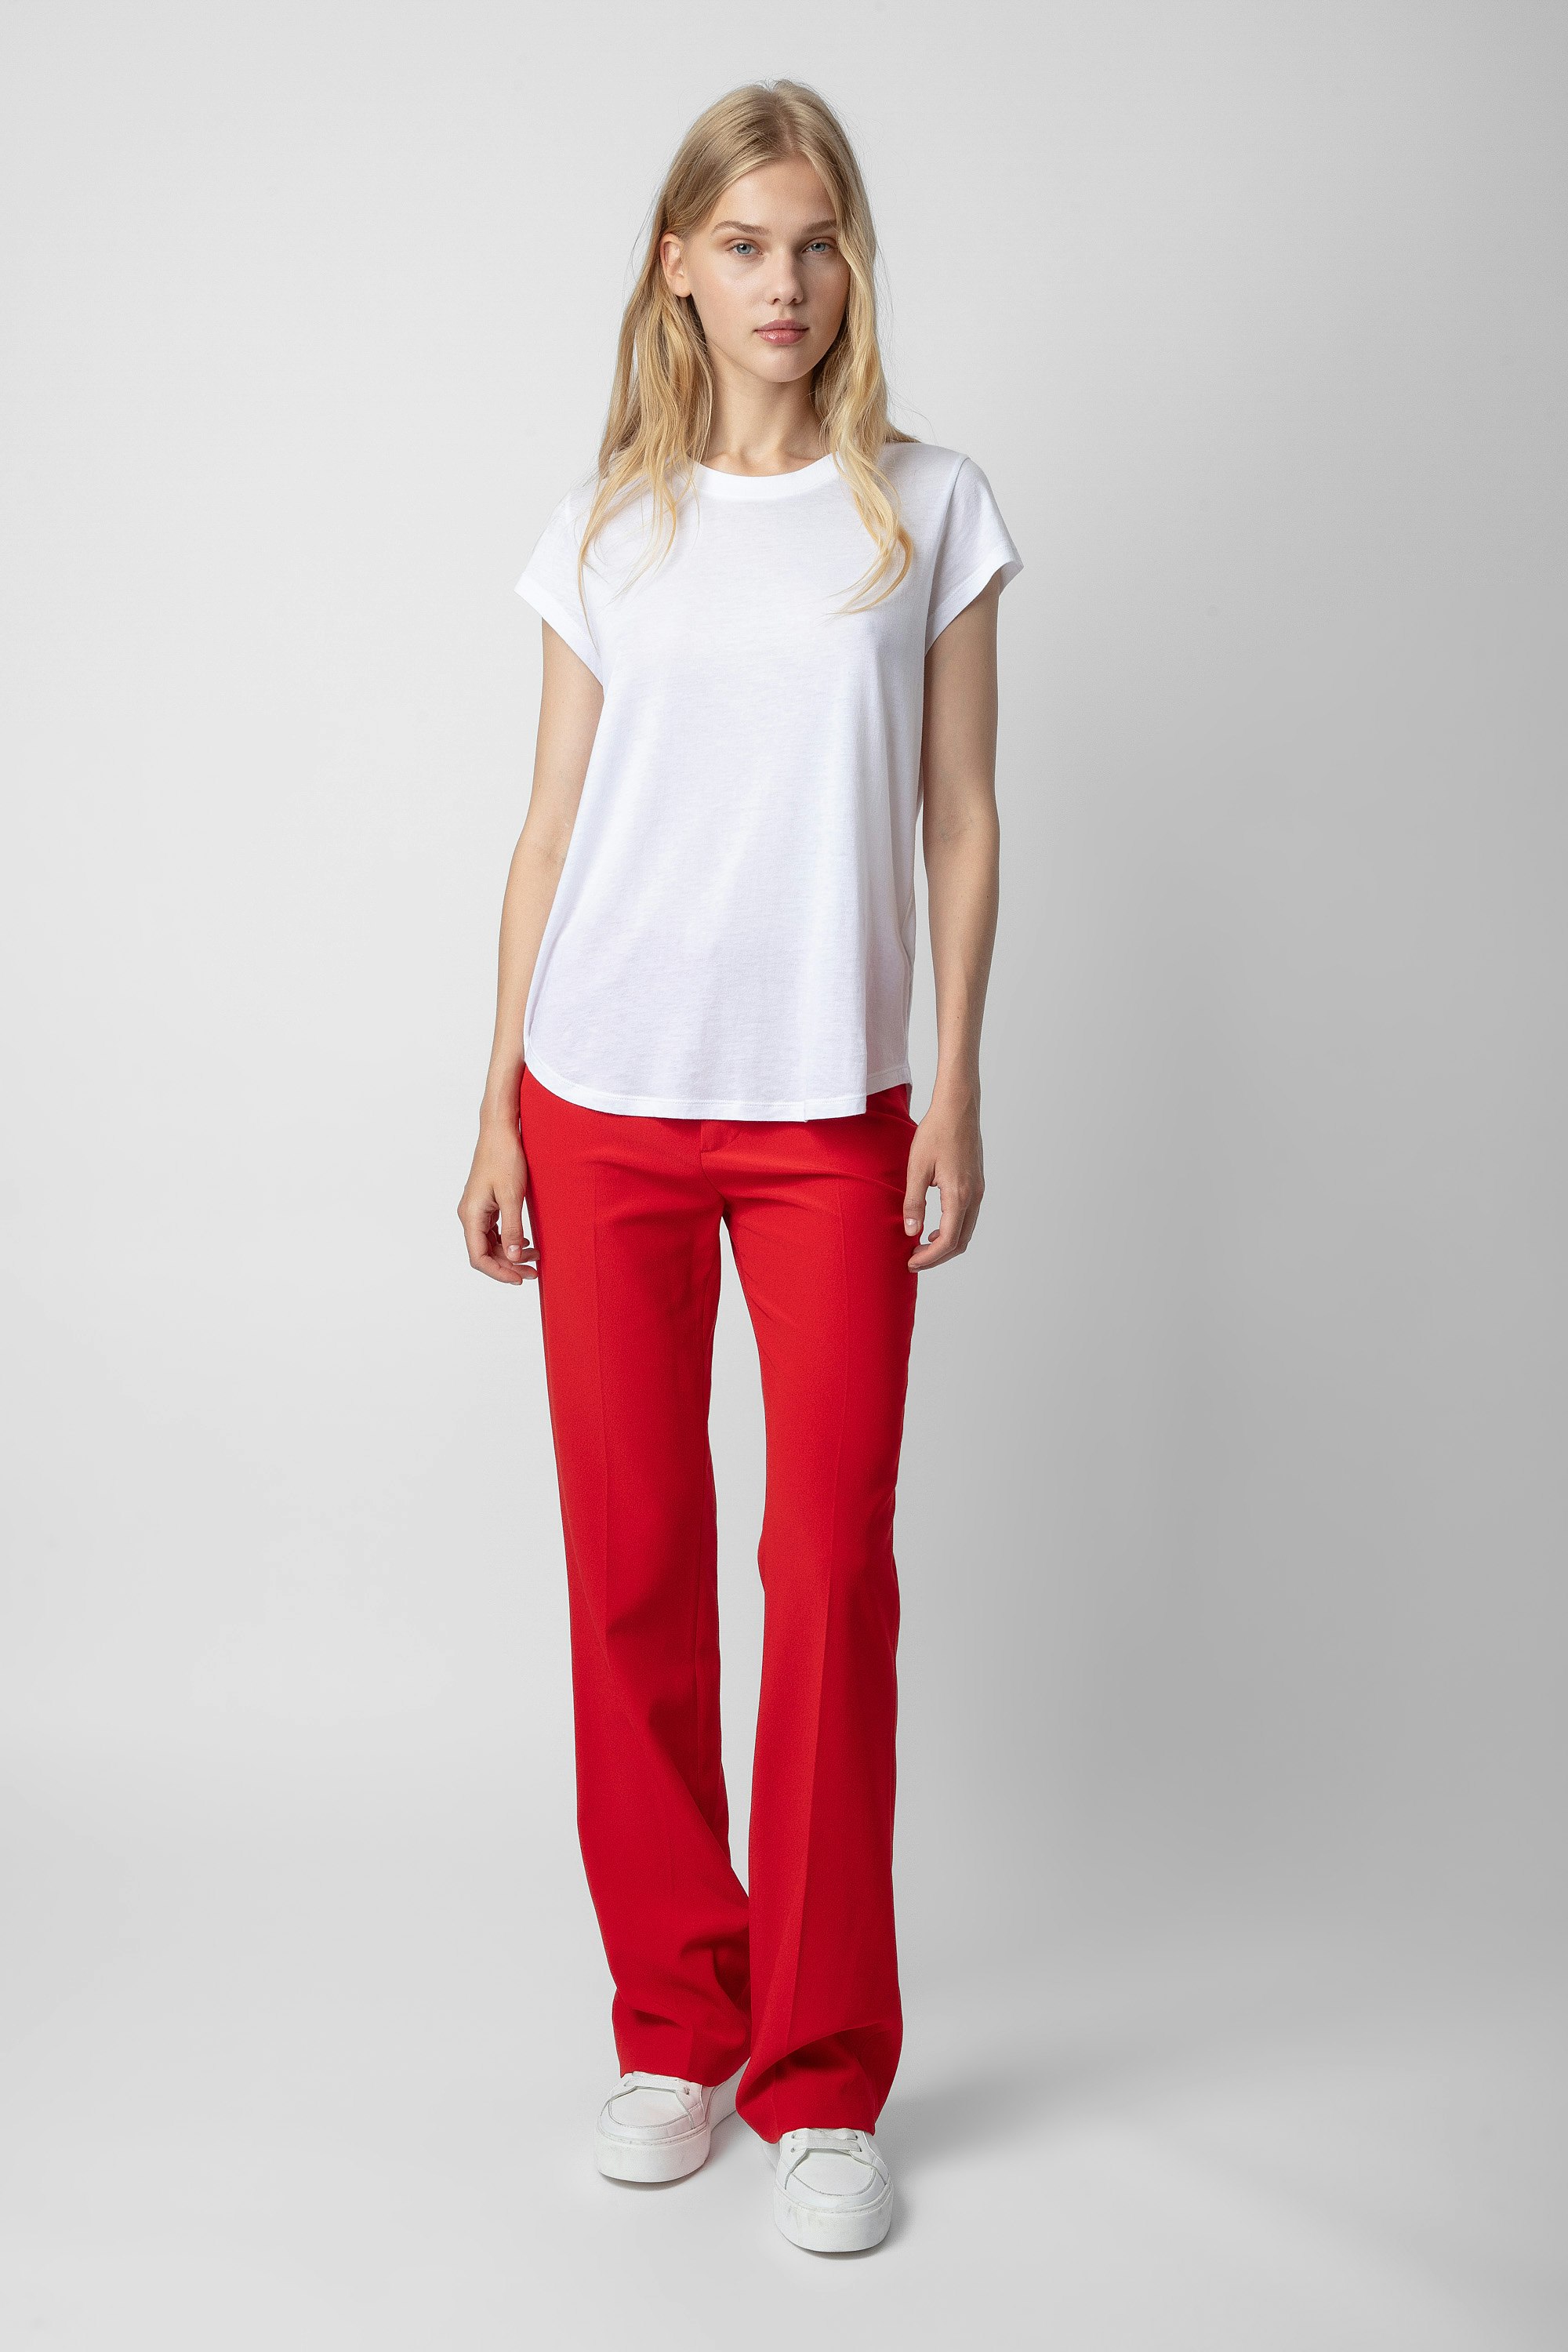 Pantaloni Pistol - Pantaloni da tailleur in crêpe rosso da donna.